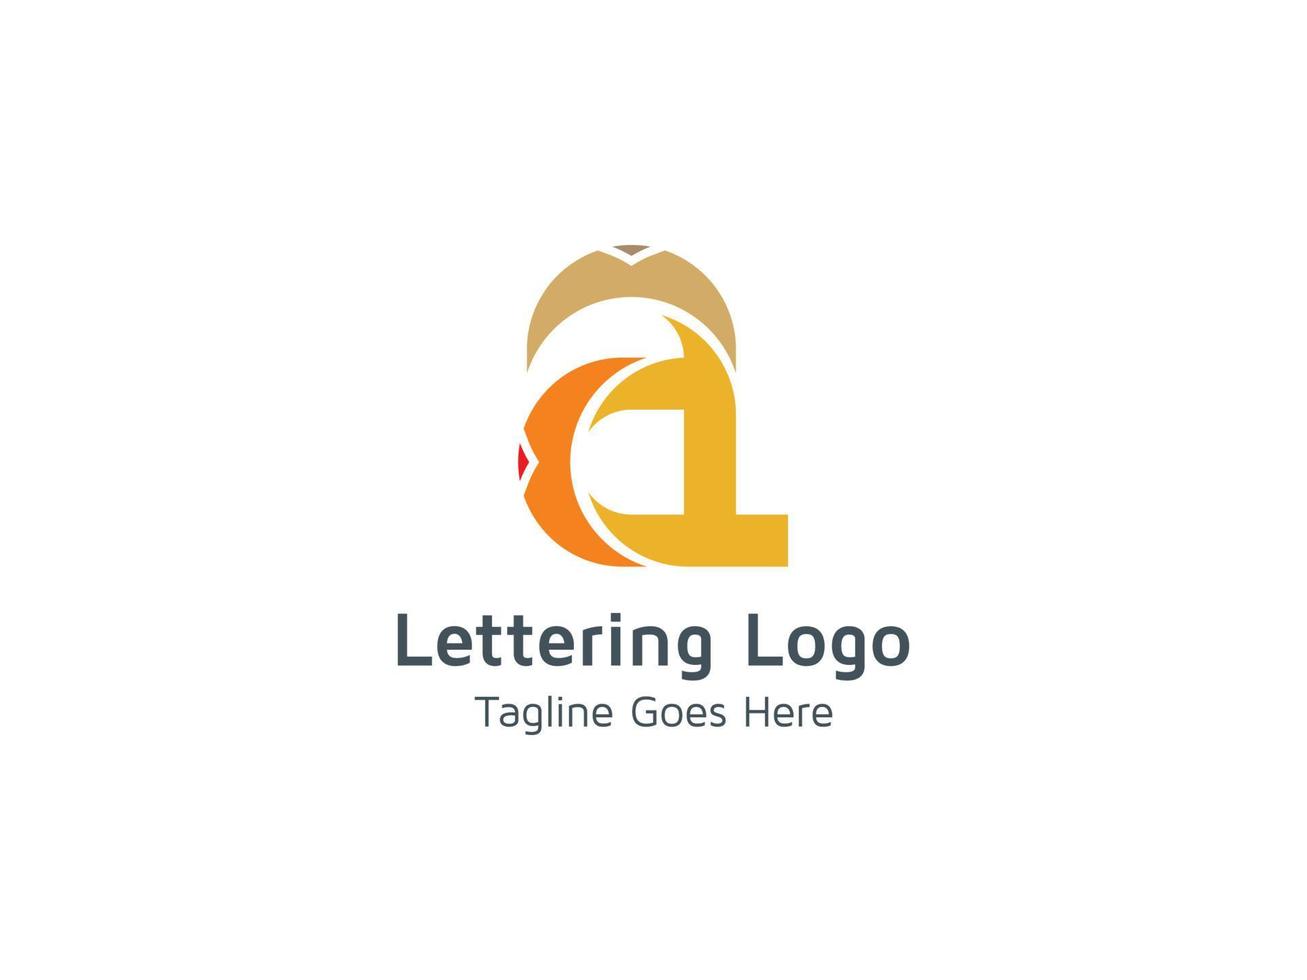 vector de plantilla de logotipo creativo abstracto de diseño de letra a